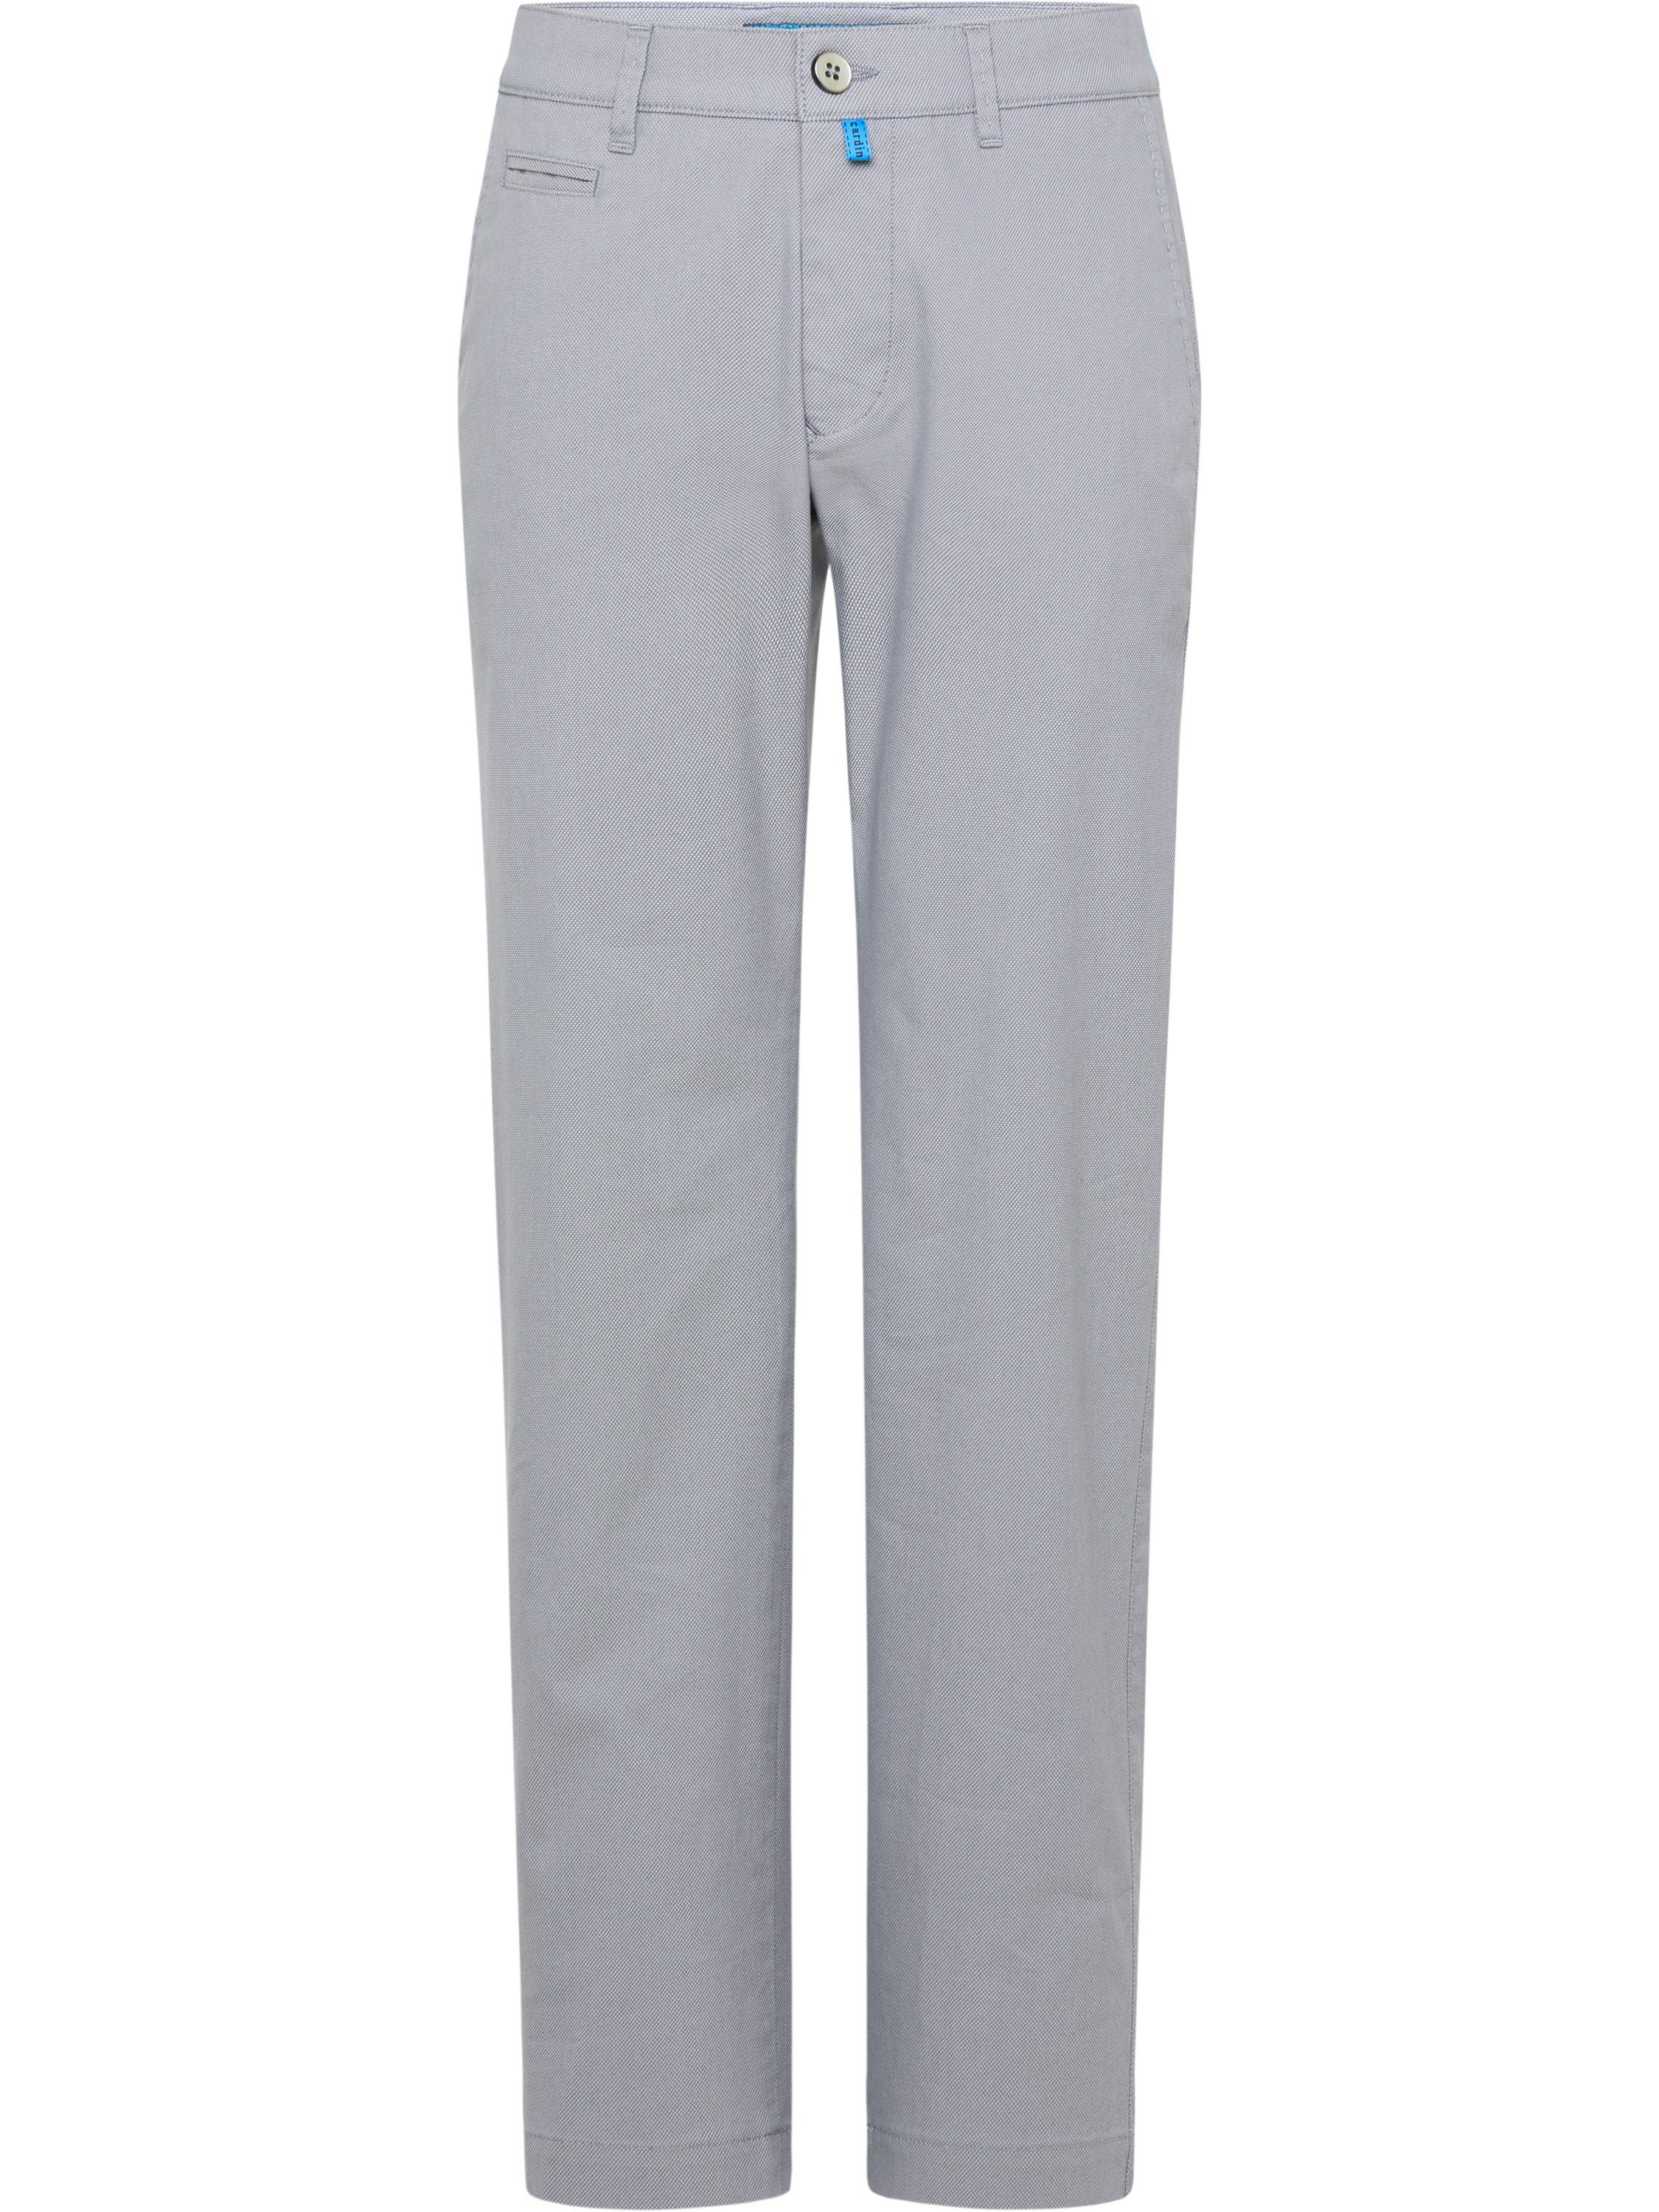 5-Pocket-Jeans CARDIN grey PIERRE 2277.8 Pierre FUTUREFLEX 82 Cardin structured LYON 33757 light 82 CHINO